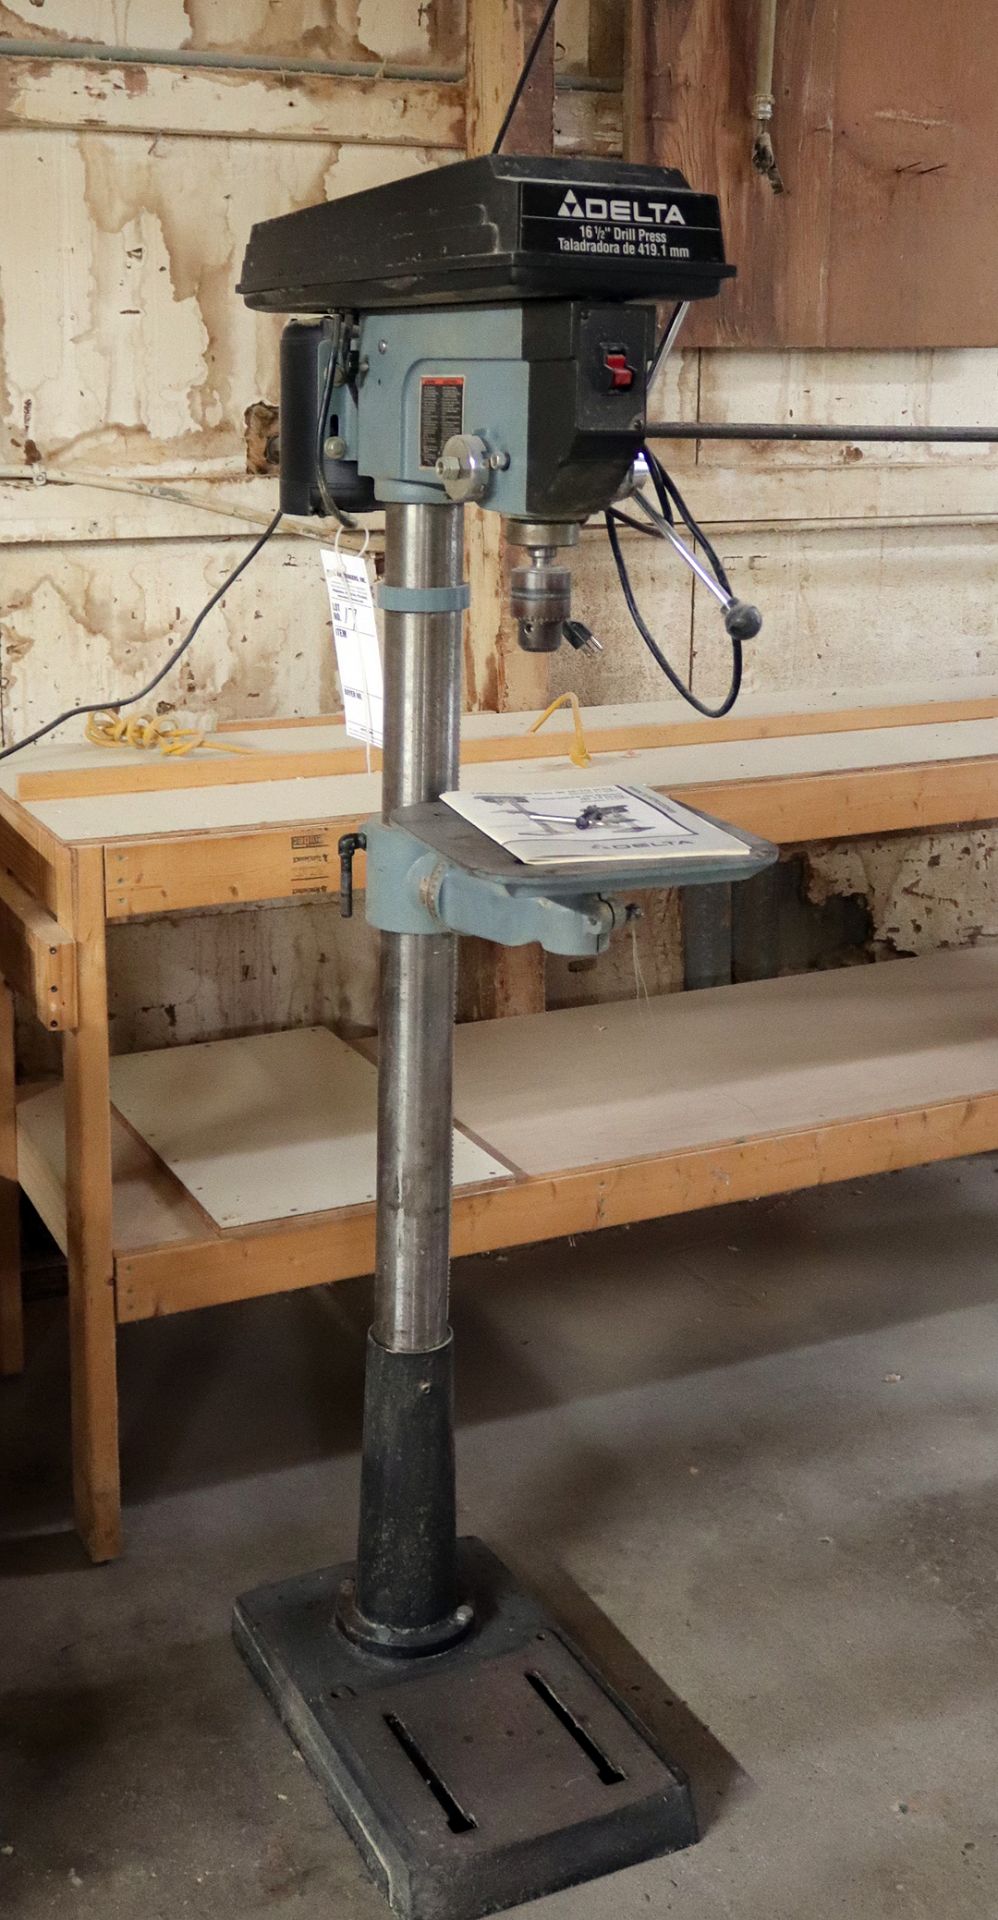 Delta 16-1/2" floor model drill press, 1 idler needs repaired